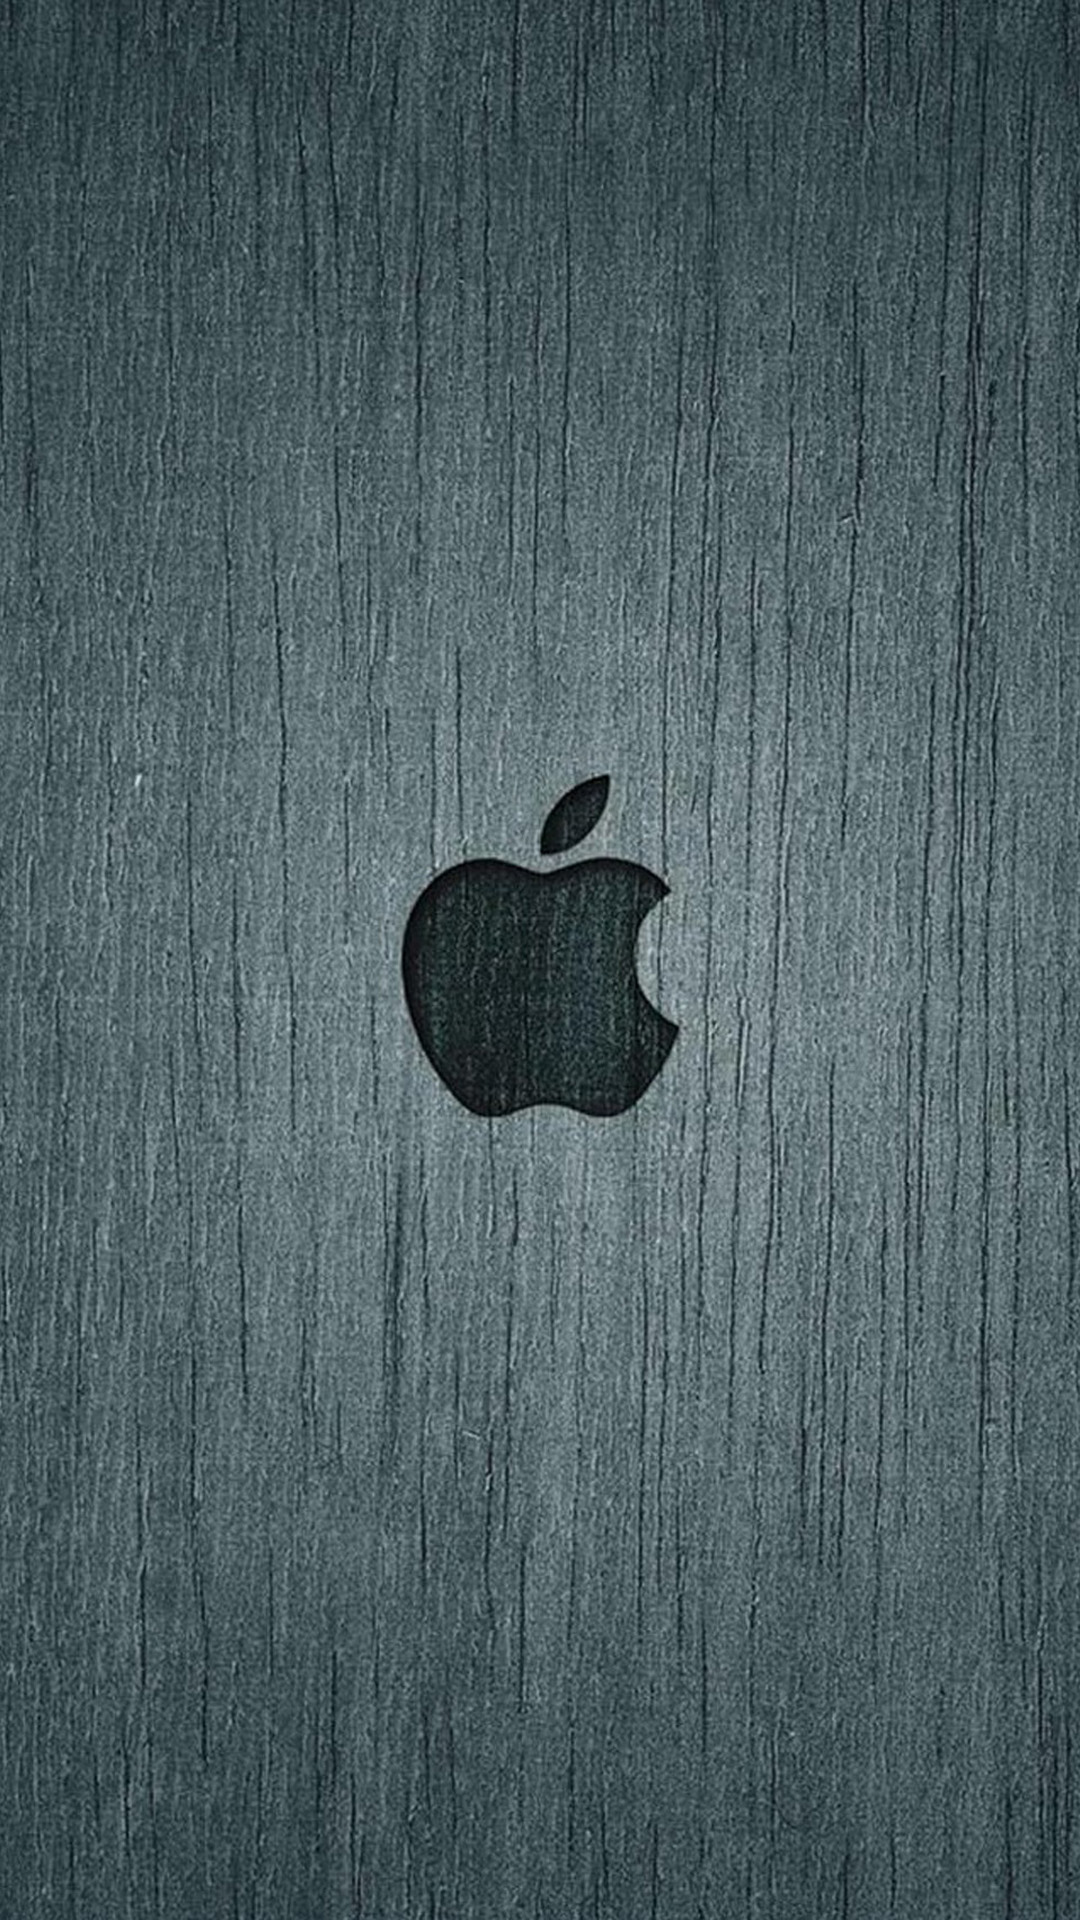 46 Apple Iphone 6 Plus Wallpaper On Wallpapersafari